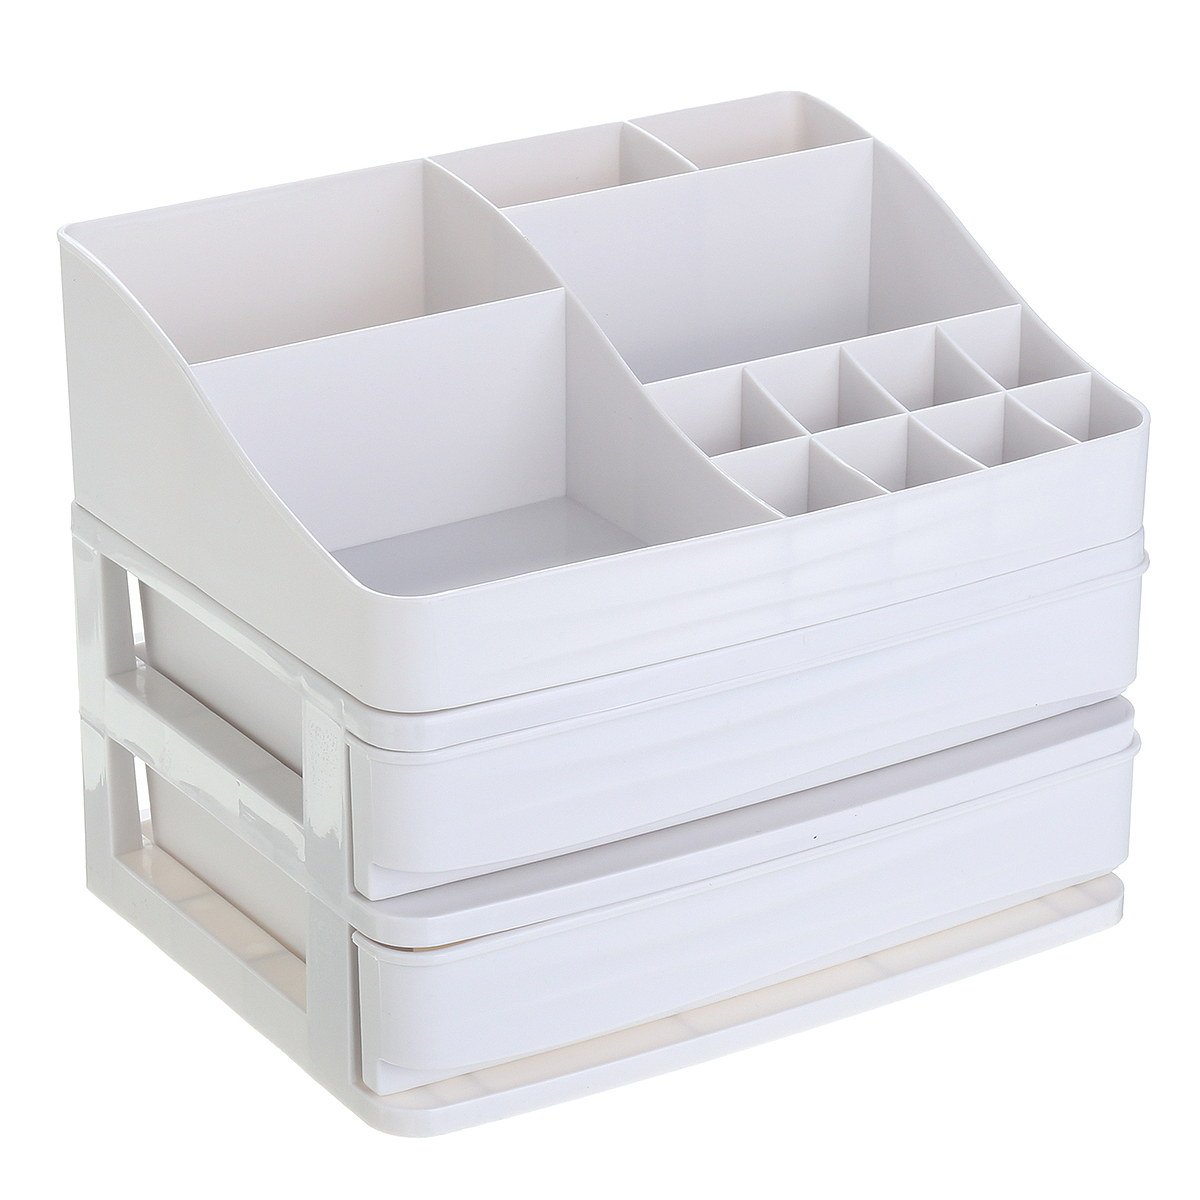 Plastic Cosmetic Box Drawer Makeup Organizer Makeup Desktop Storage Box Container Nail Casket Holder Jewelry Organizer Desktop Organizer—3